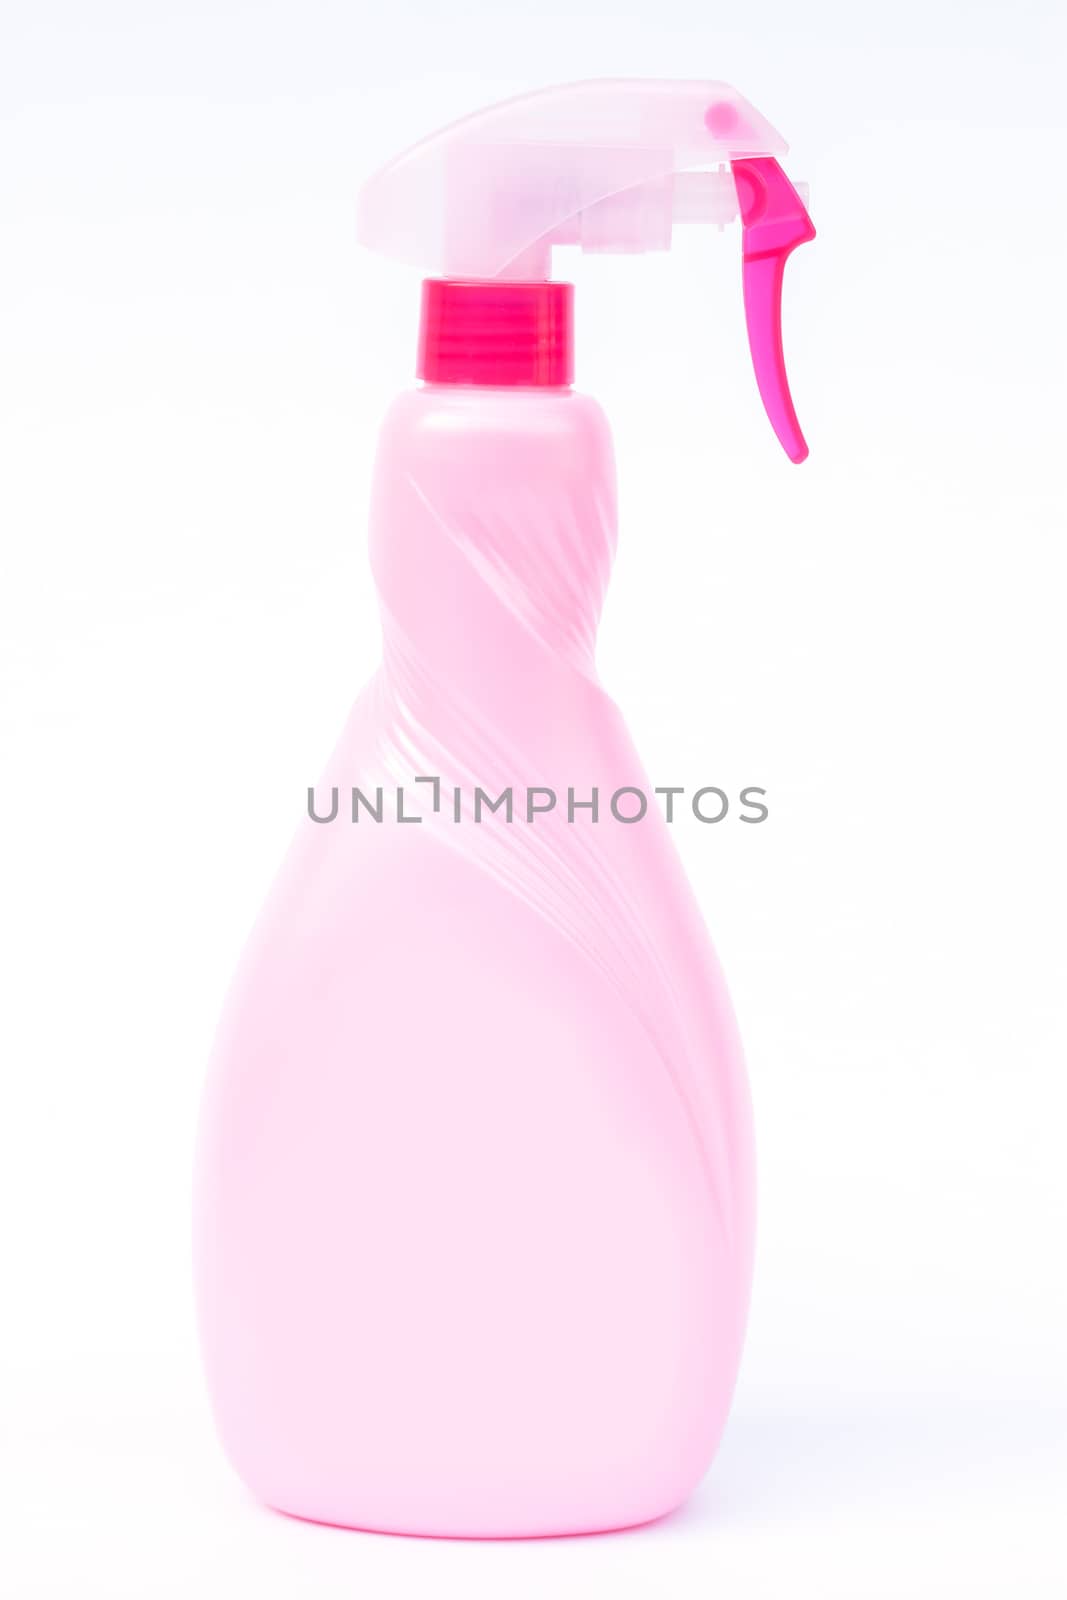 Pink plastic foggy spray bottle isolated on white background, stock photo